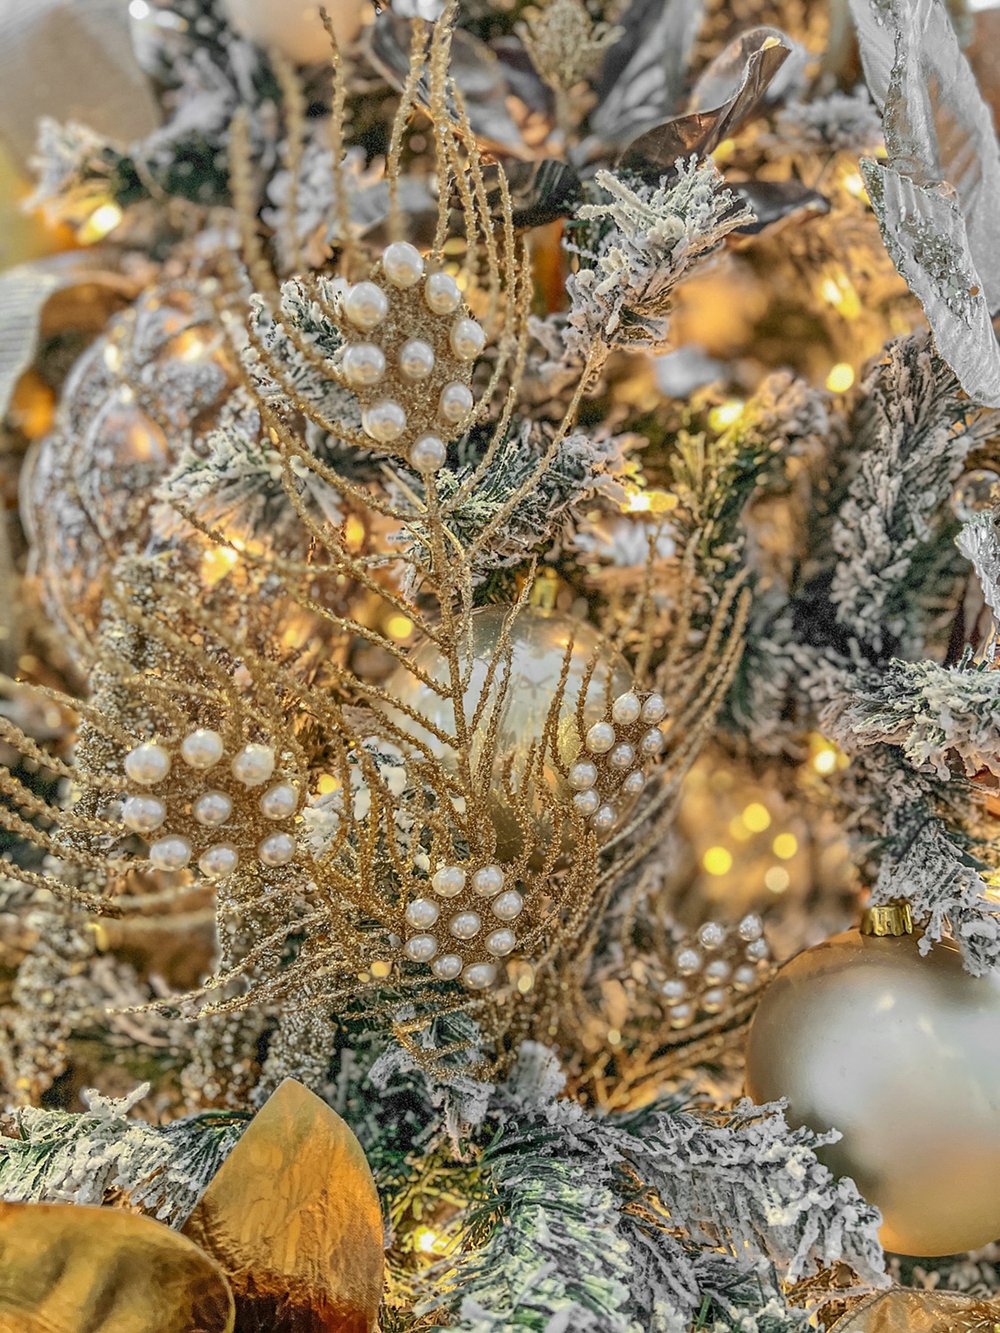 south-florida-christmas-tree-holiday-decor-close-up-detail-sparkling-bridget-king-captiva-design-blog.jpg